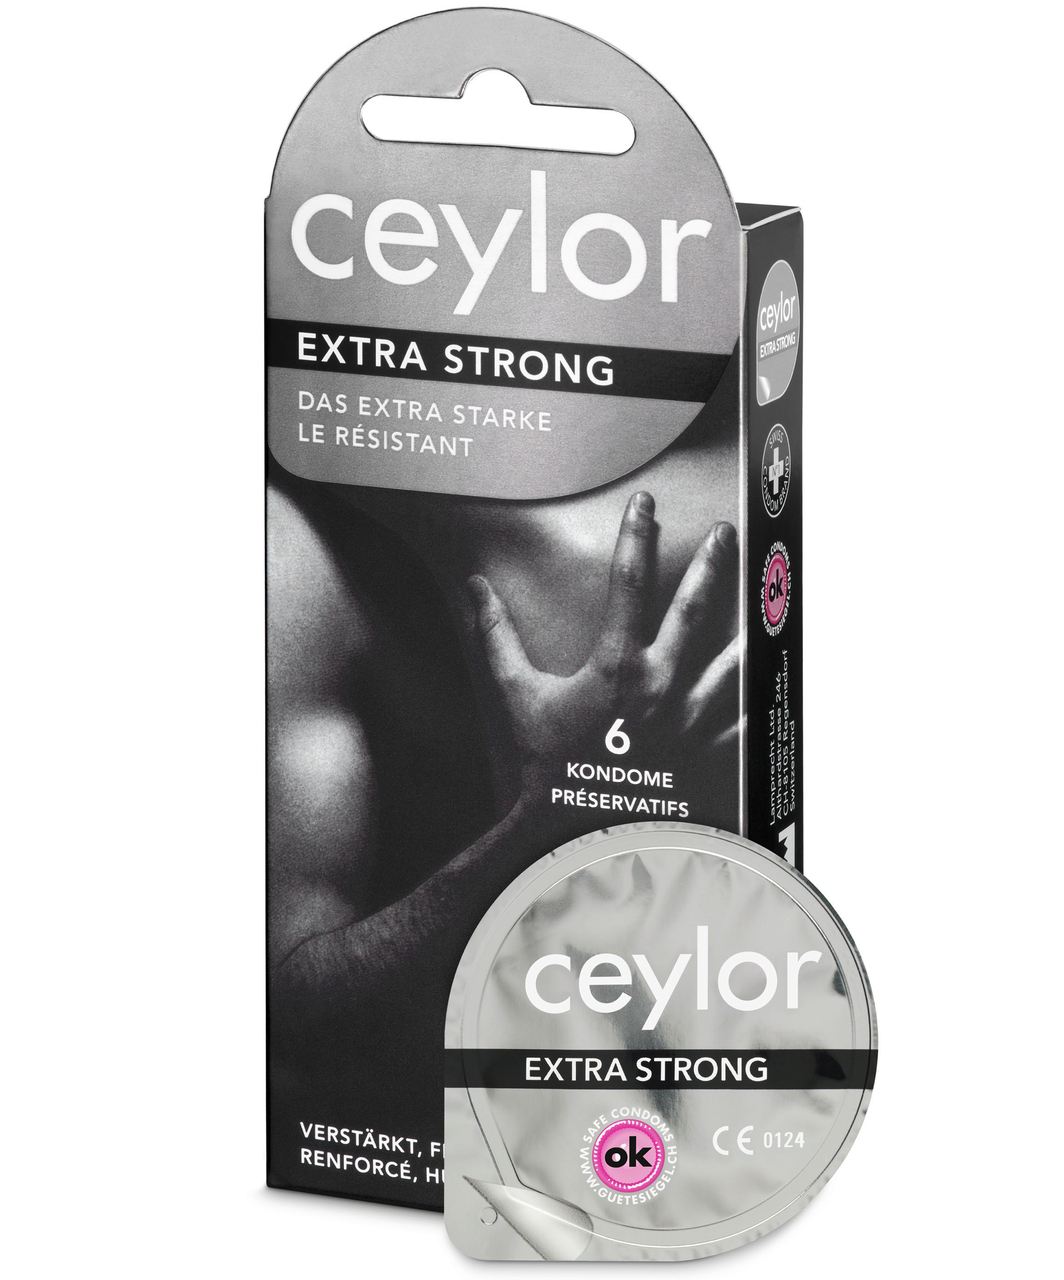 Ceylor Extra Strong condoms (6 pcs)